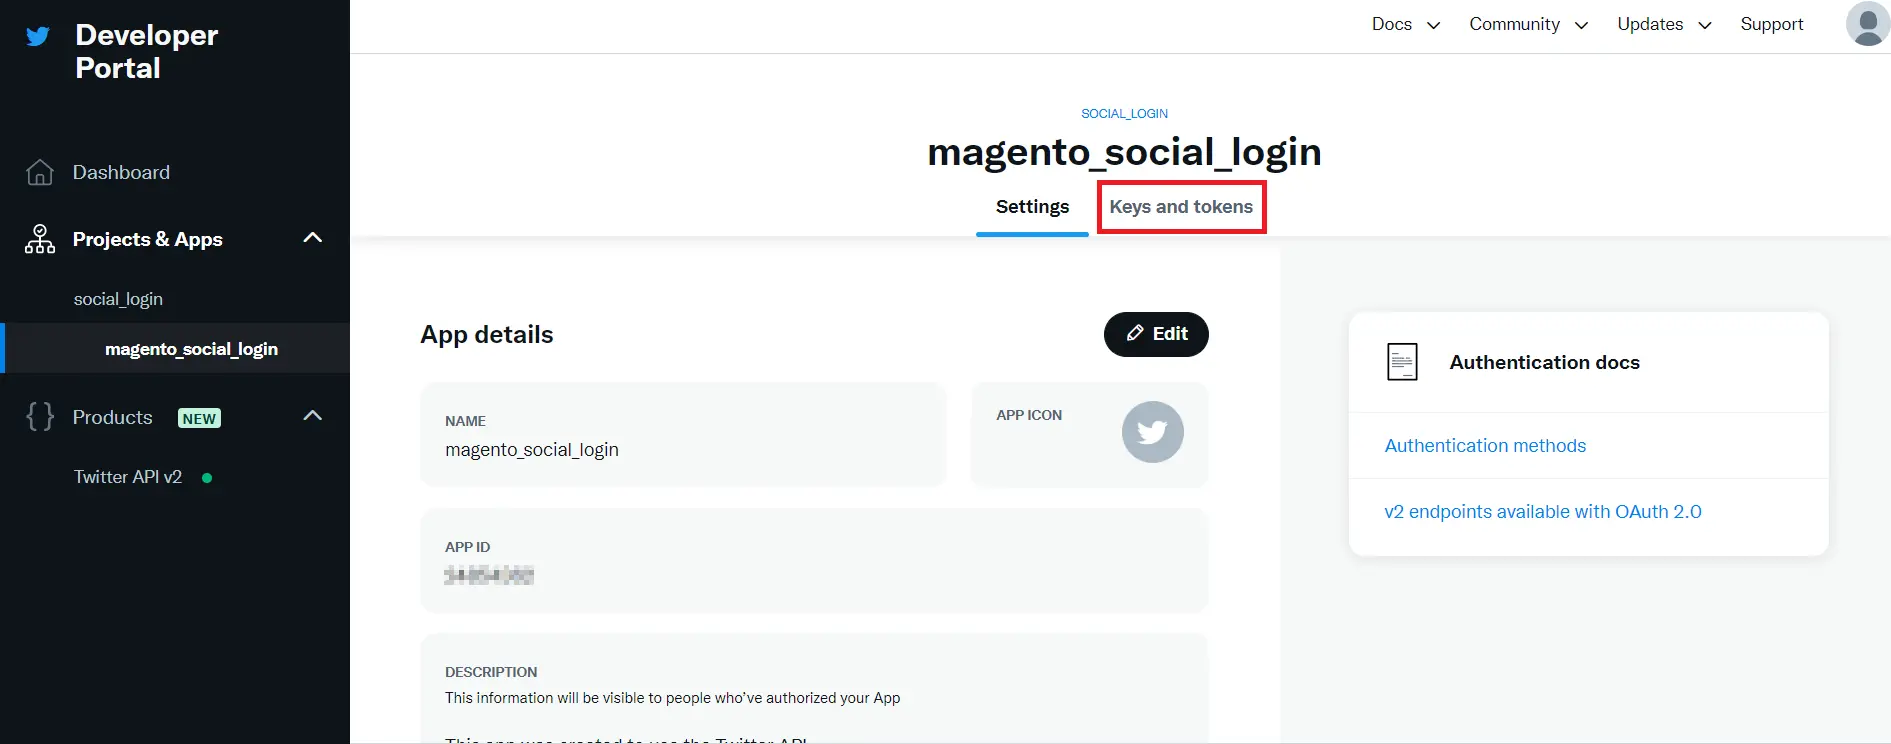 magento 2 twitter signin keys and tokens | Magento 2 Twitter login